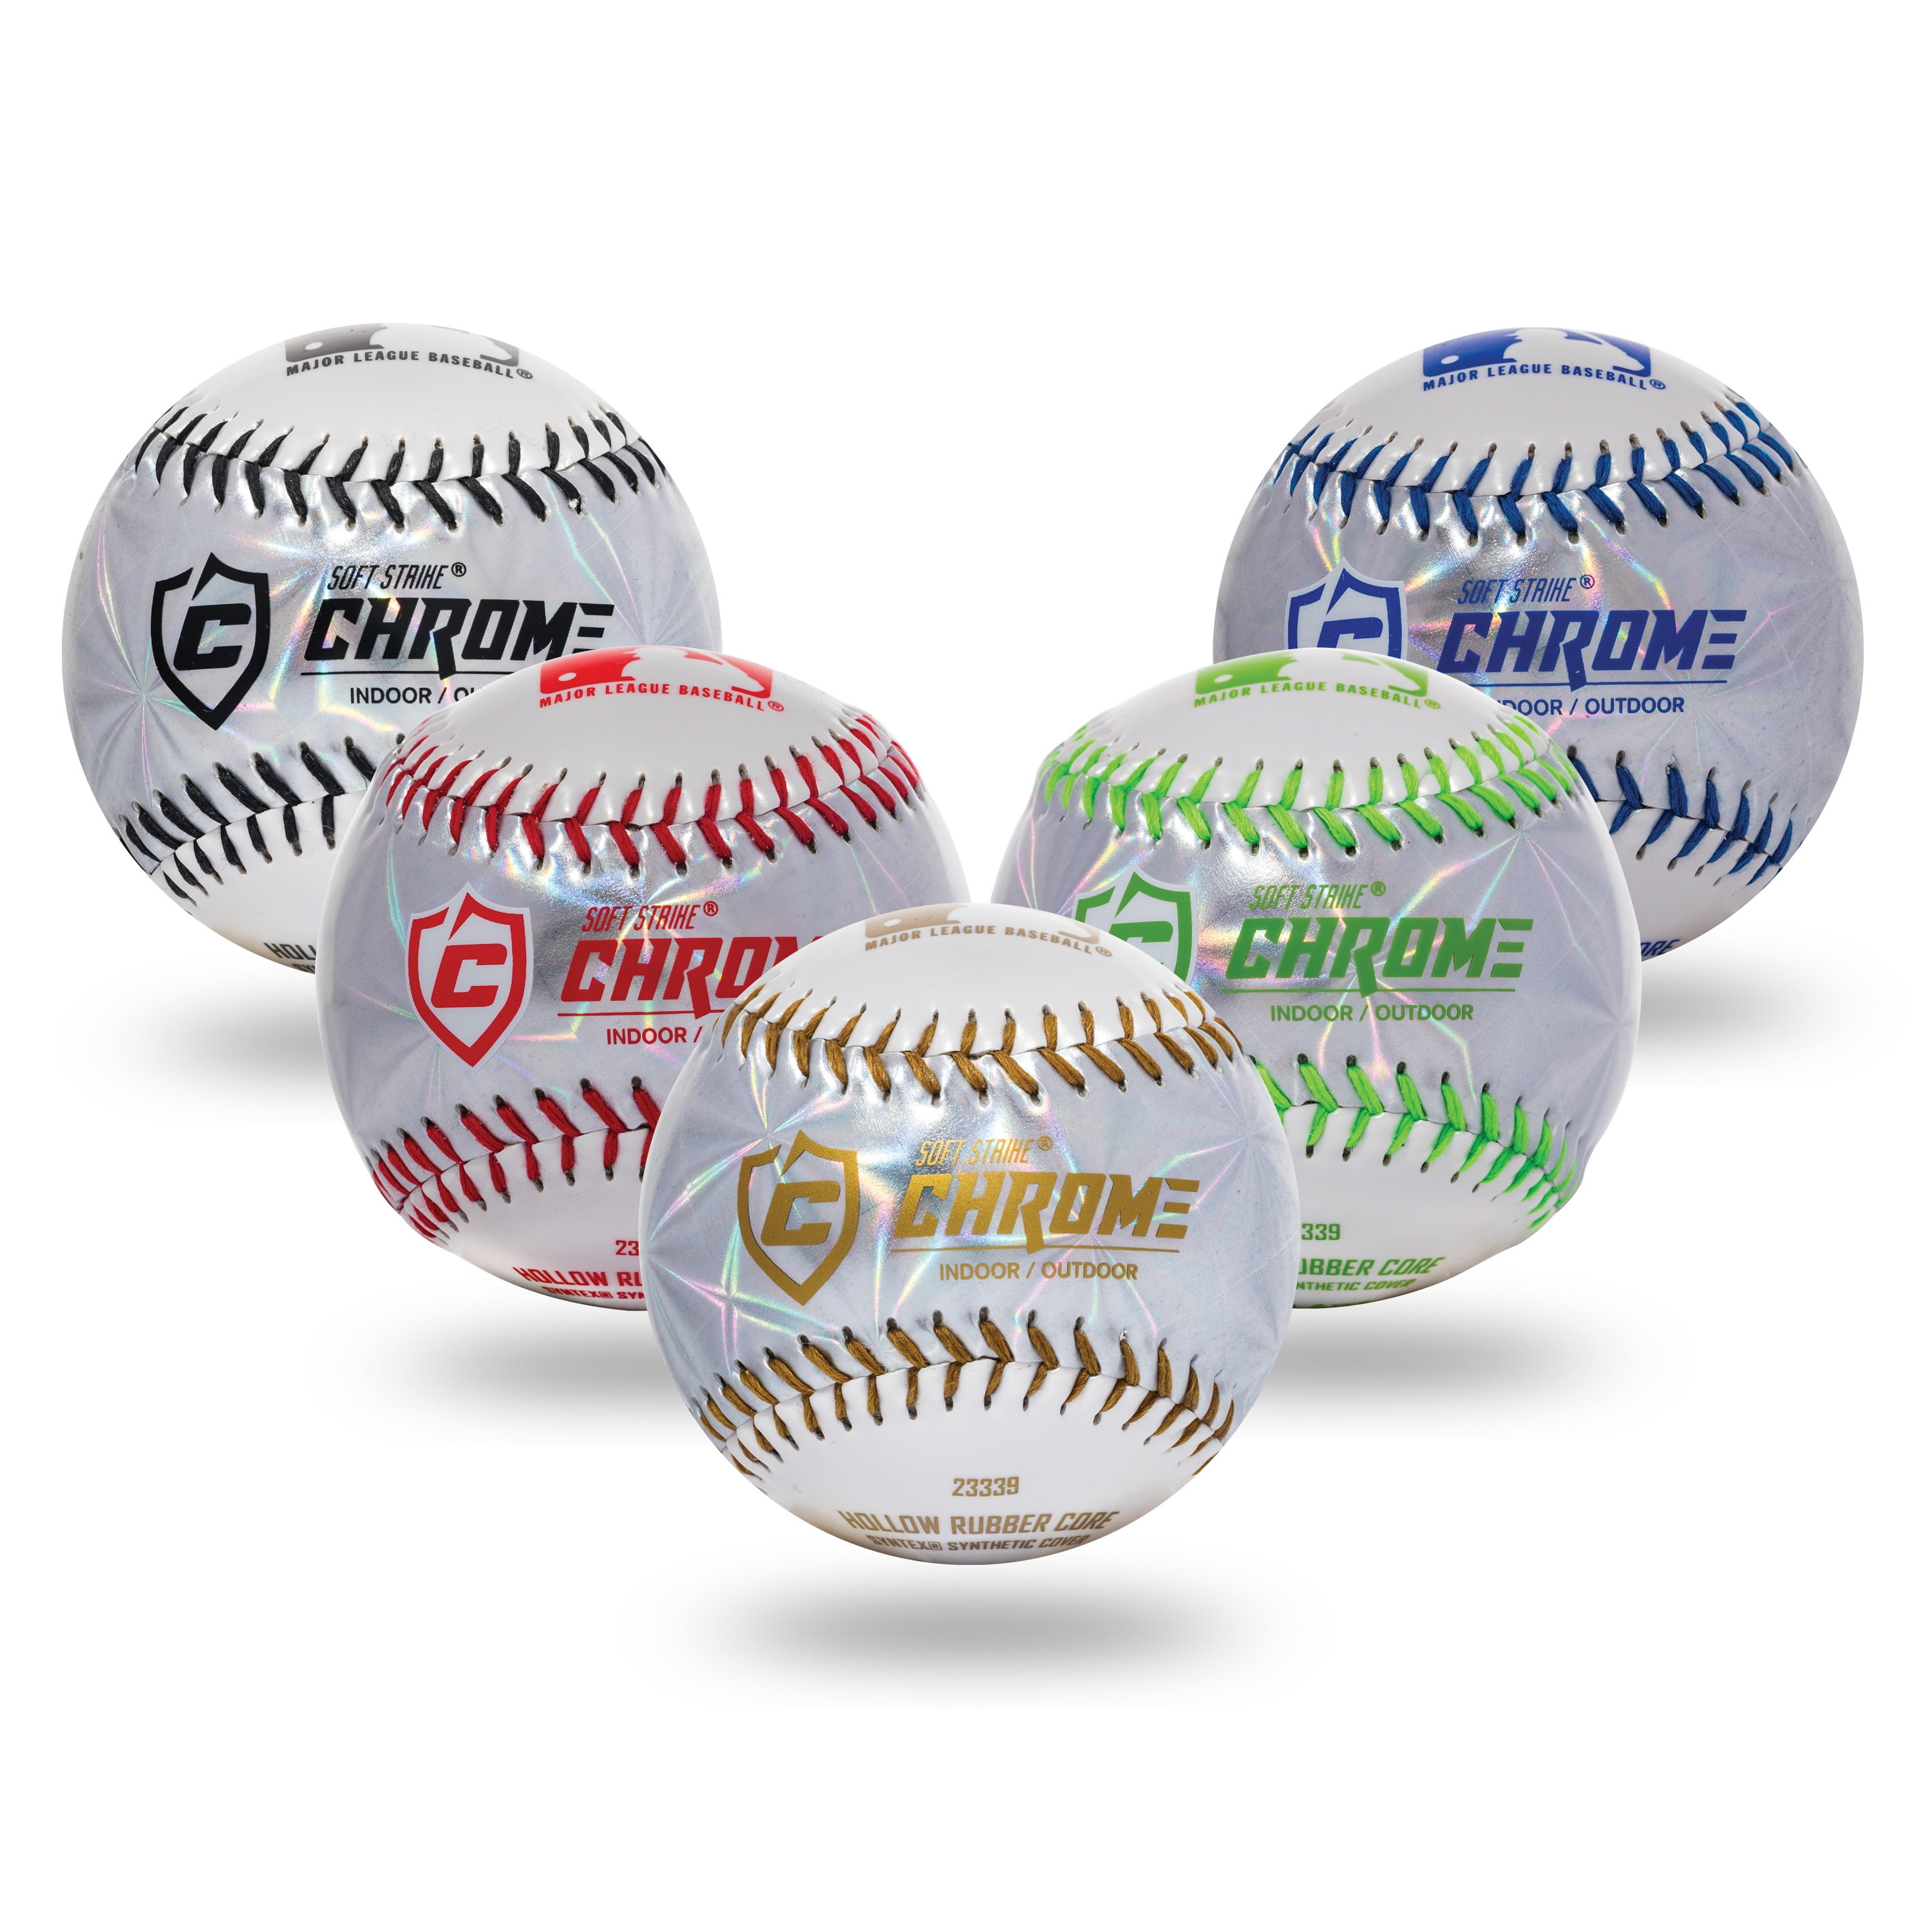 Wholesale Lot of 12 Franklin Sports Soft Strike Baseball Ball Teeballs NEW 